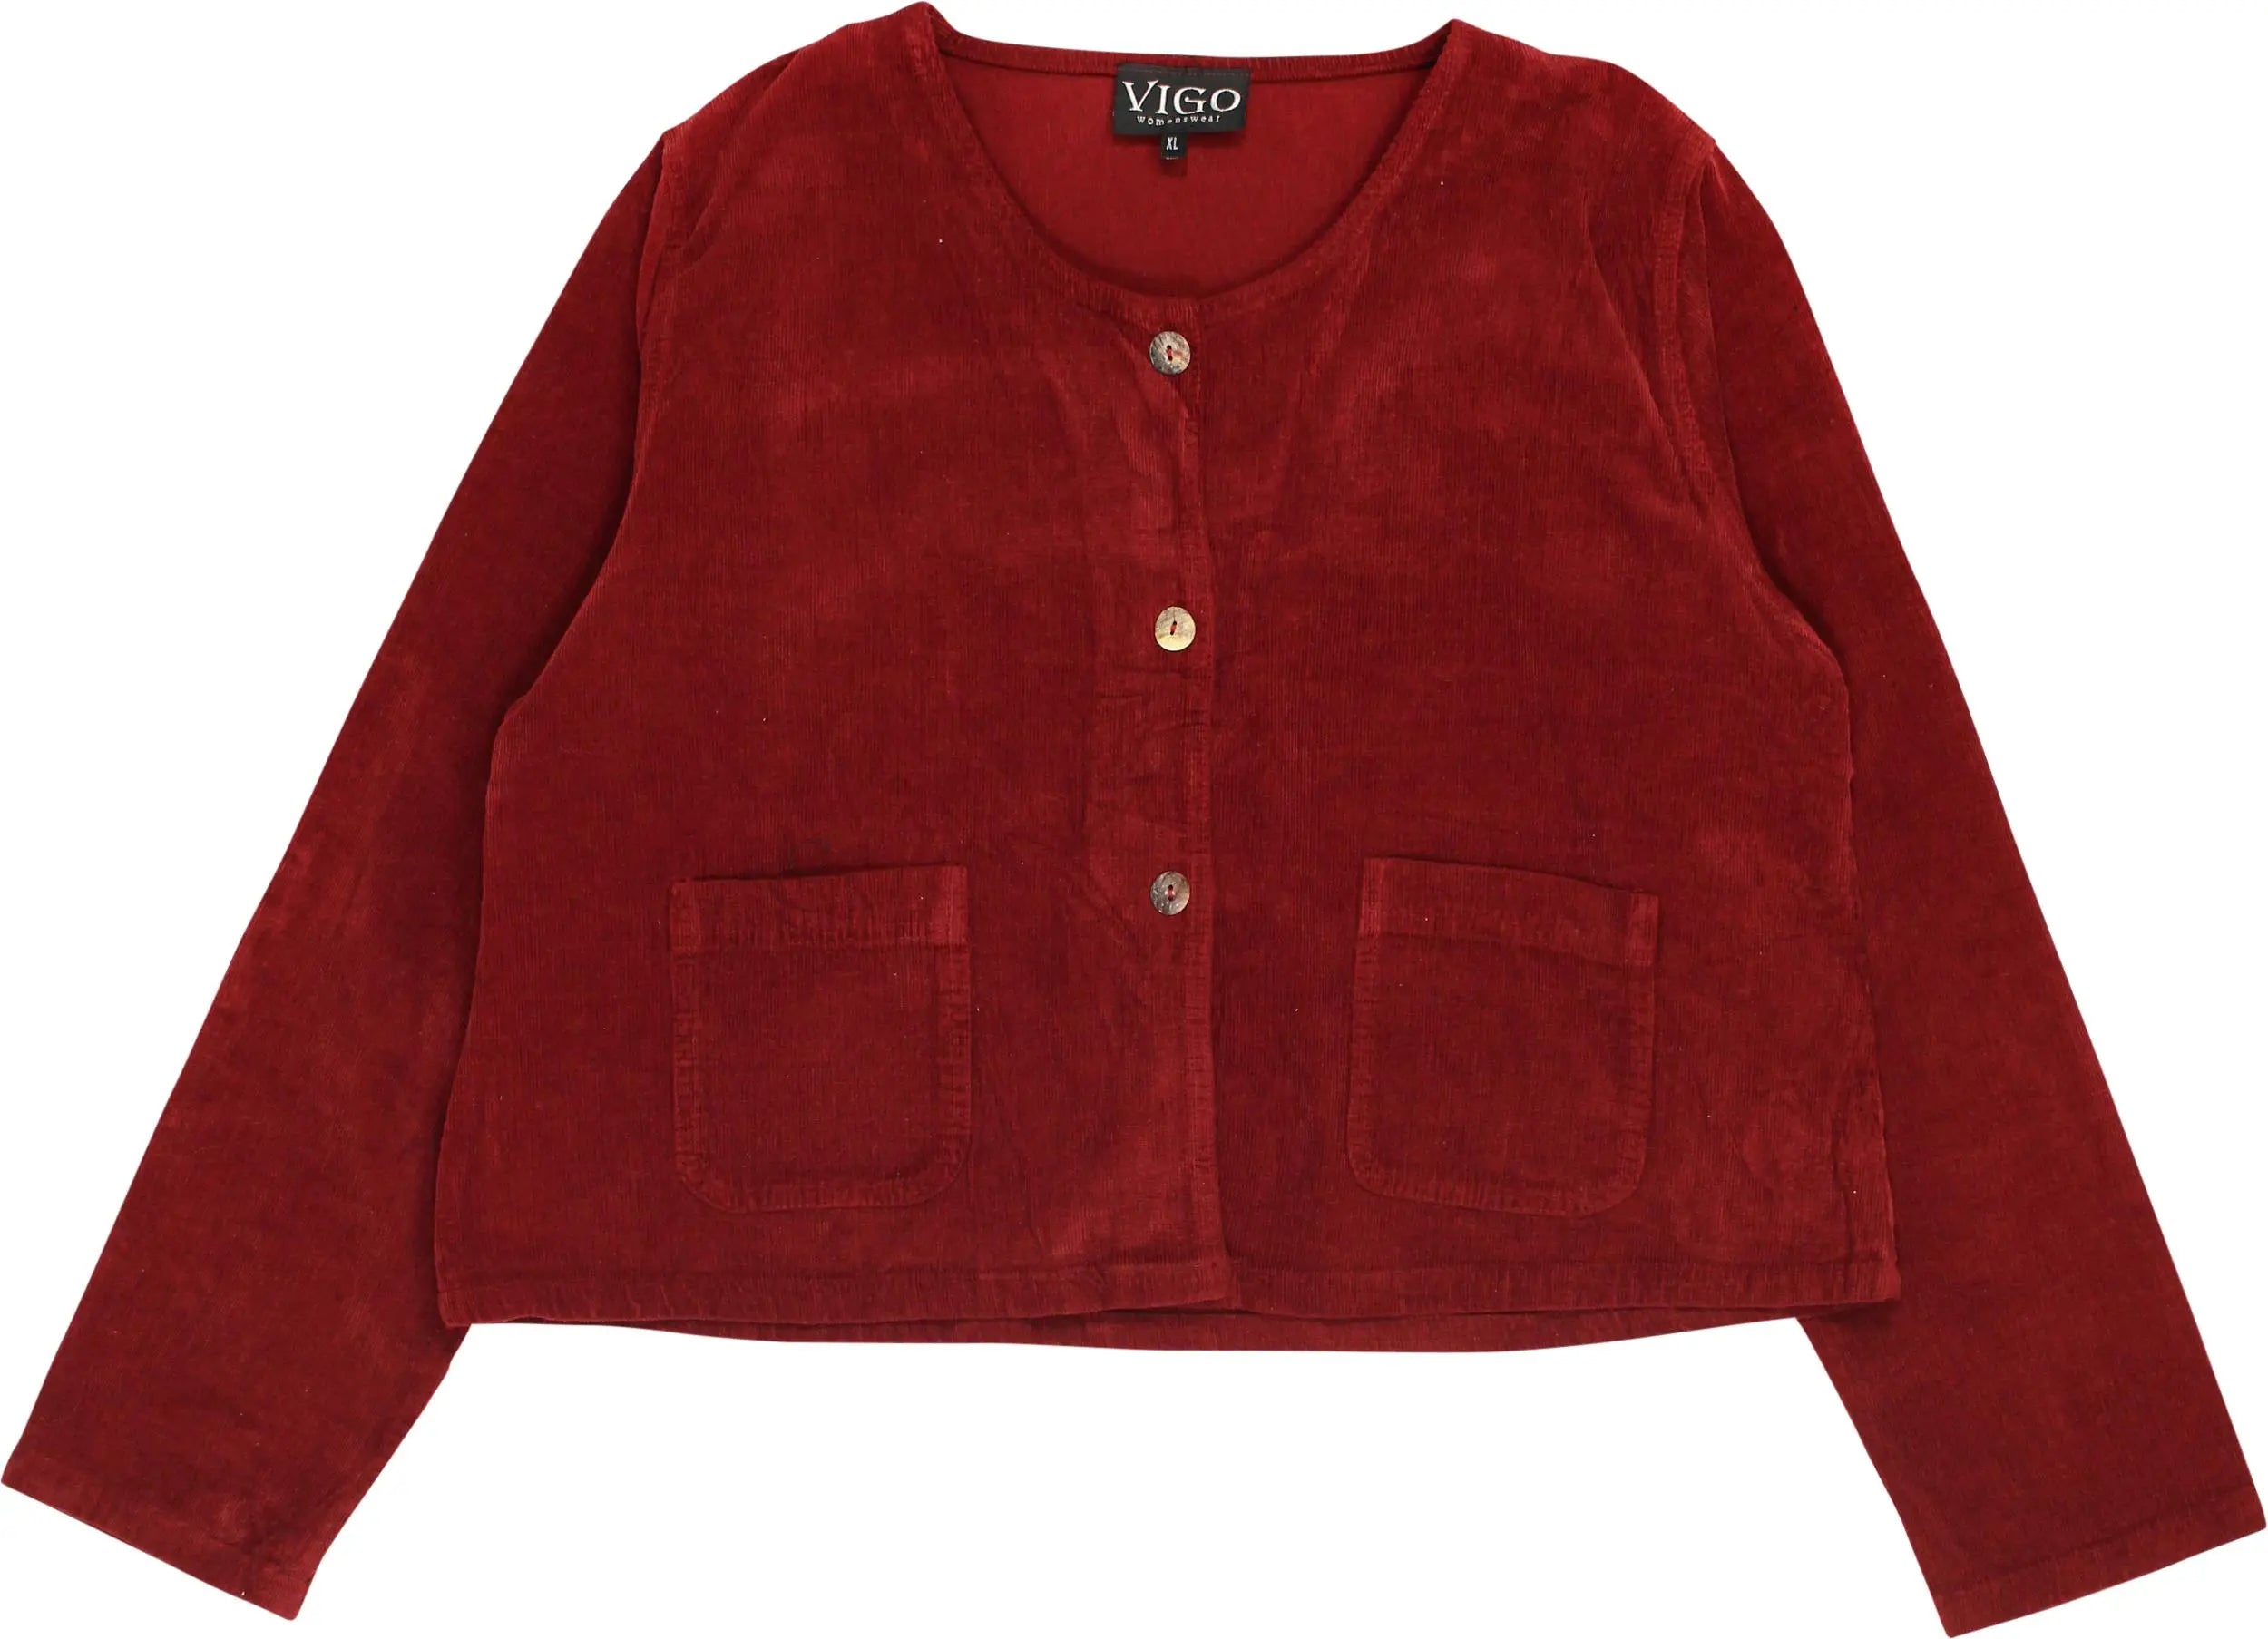 Vigo - Corduroy Jacket- ThriftTale.com - Vintage and second handclothing